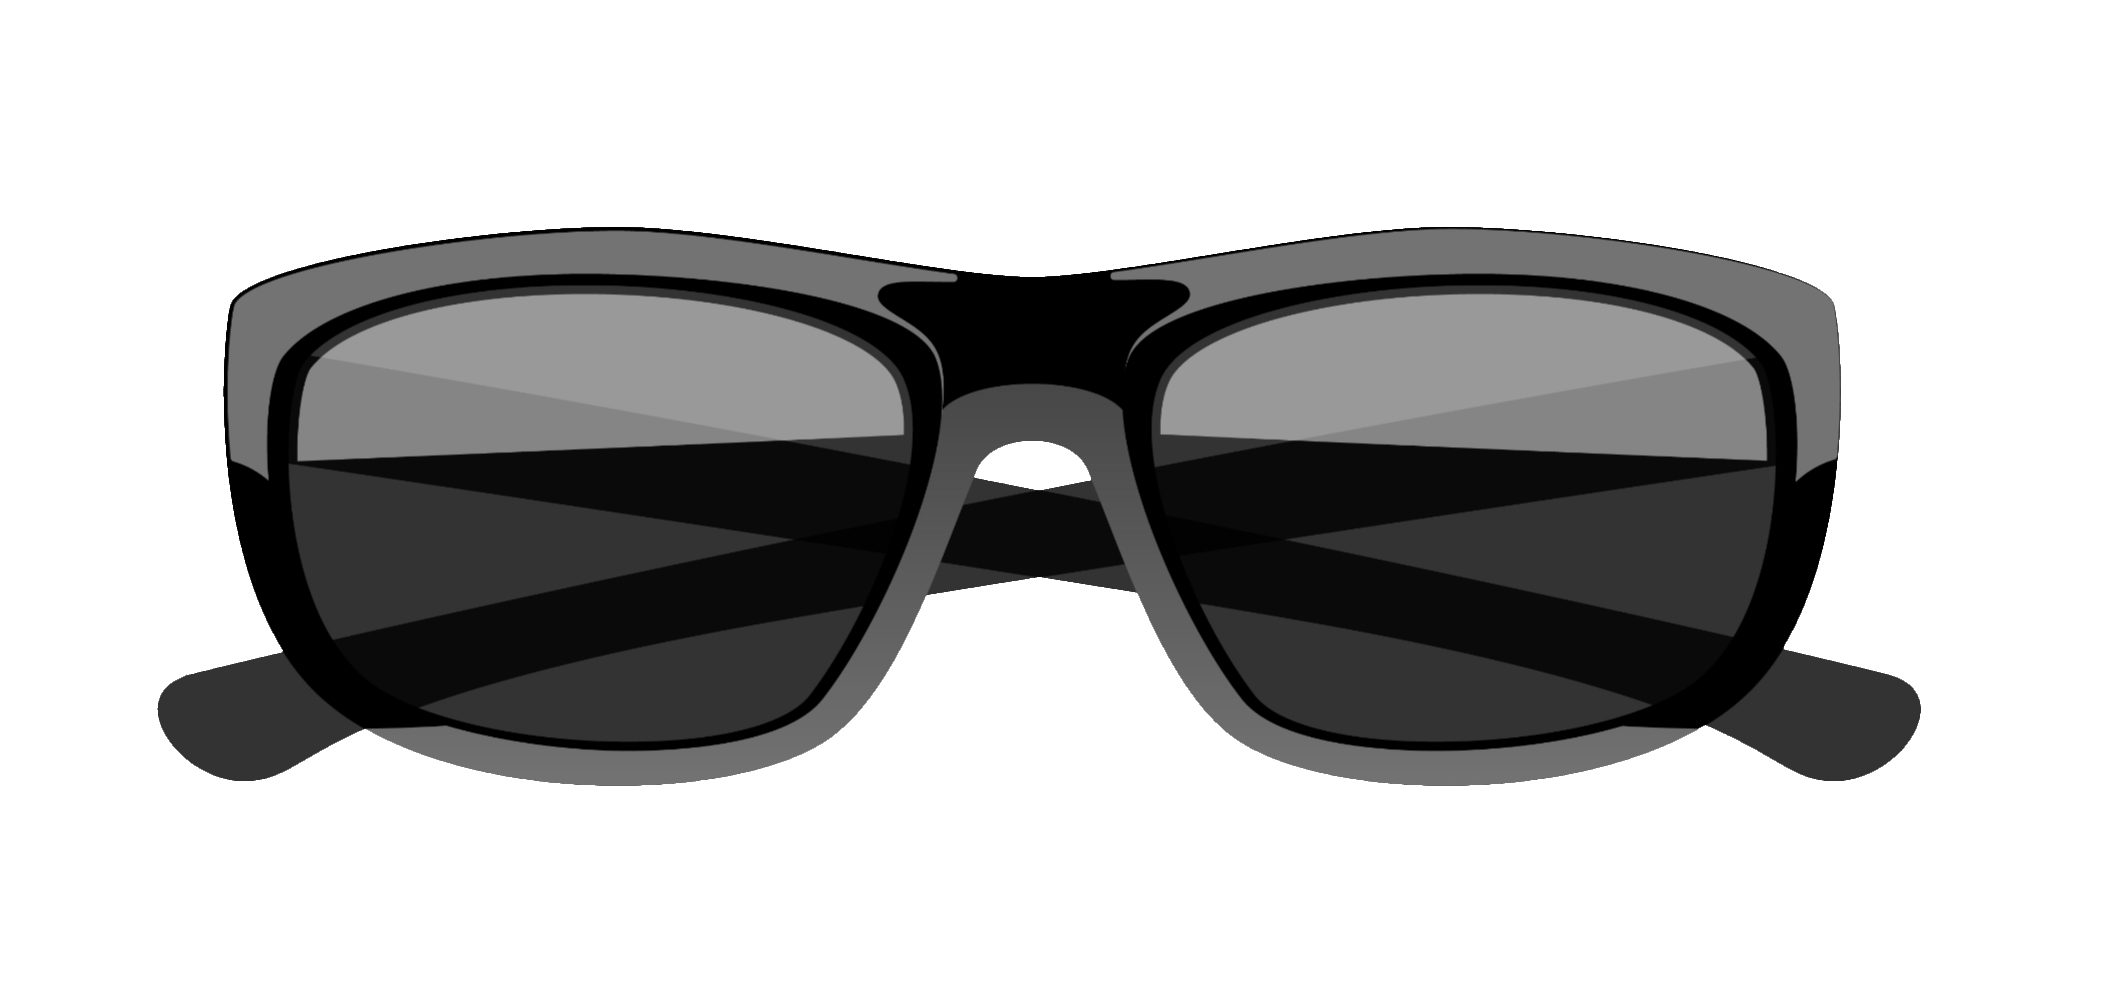 sunglasses-91